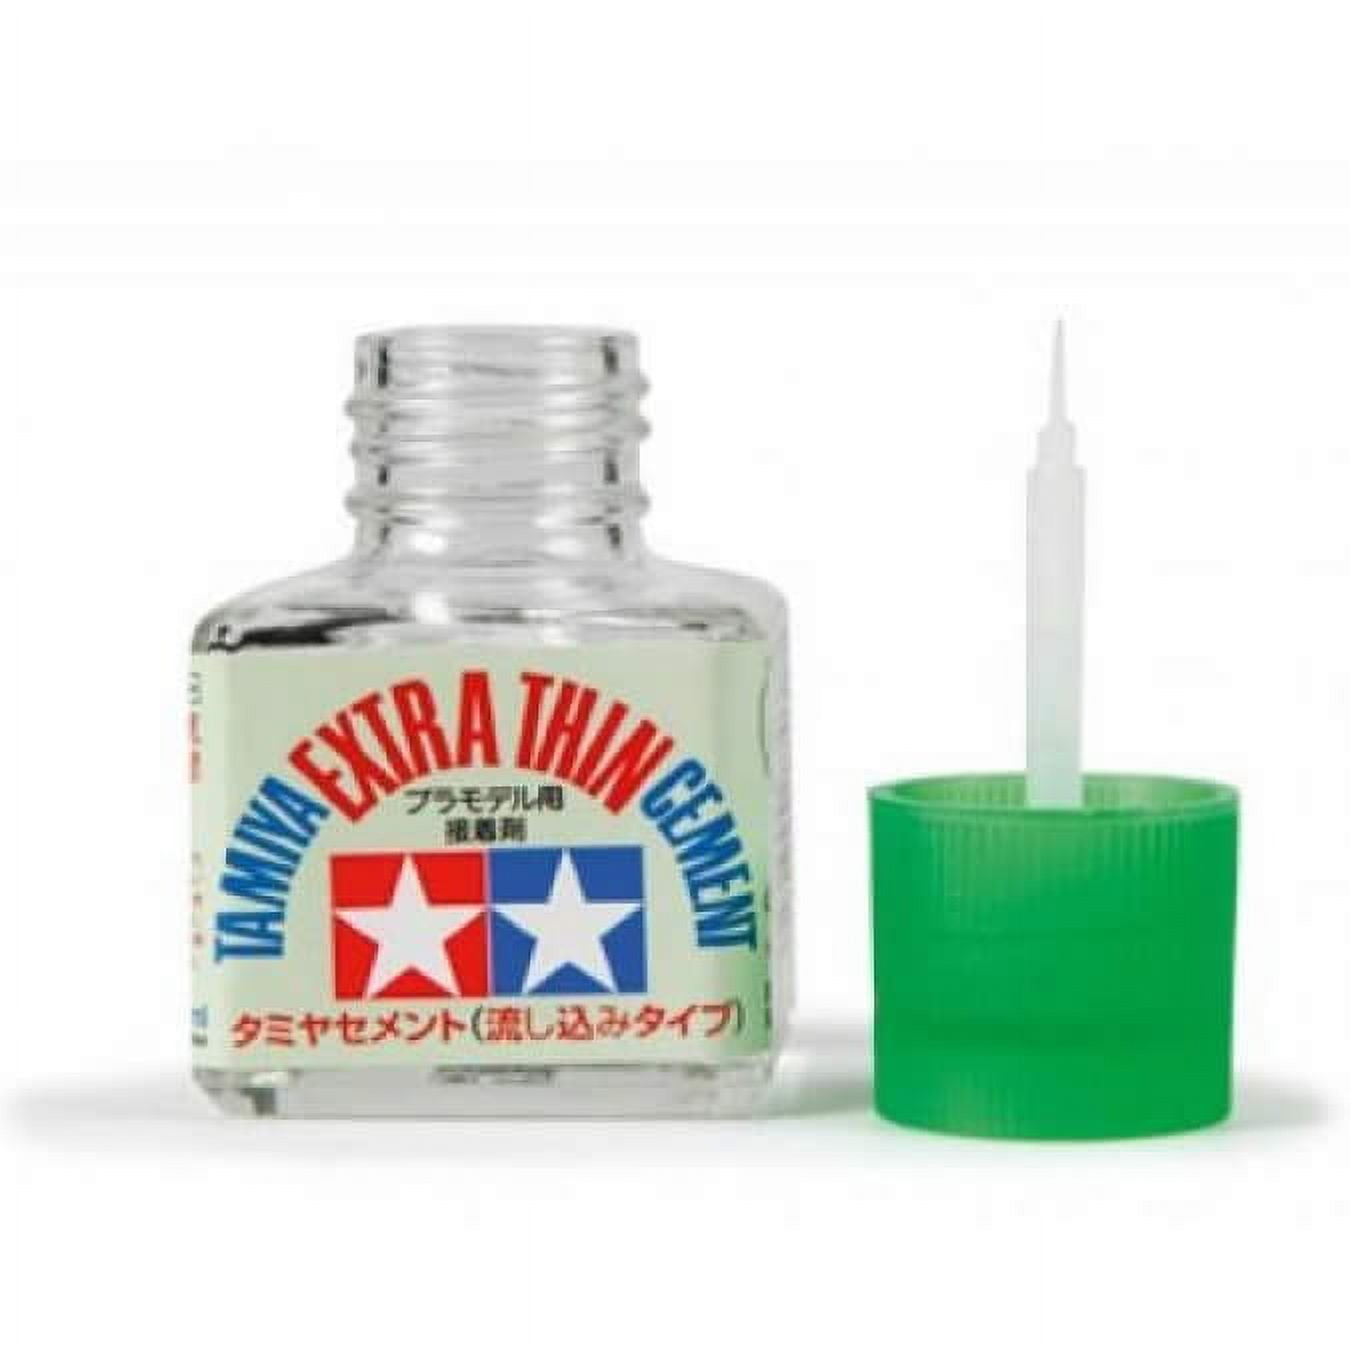 Tamiya glue Liquid Glue Tamiya 400Cc. with 1001hobbies (#003 03)